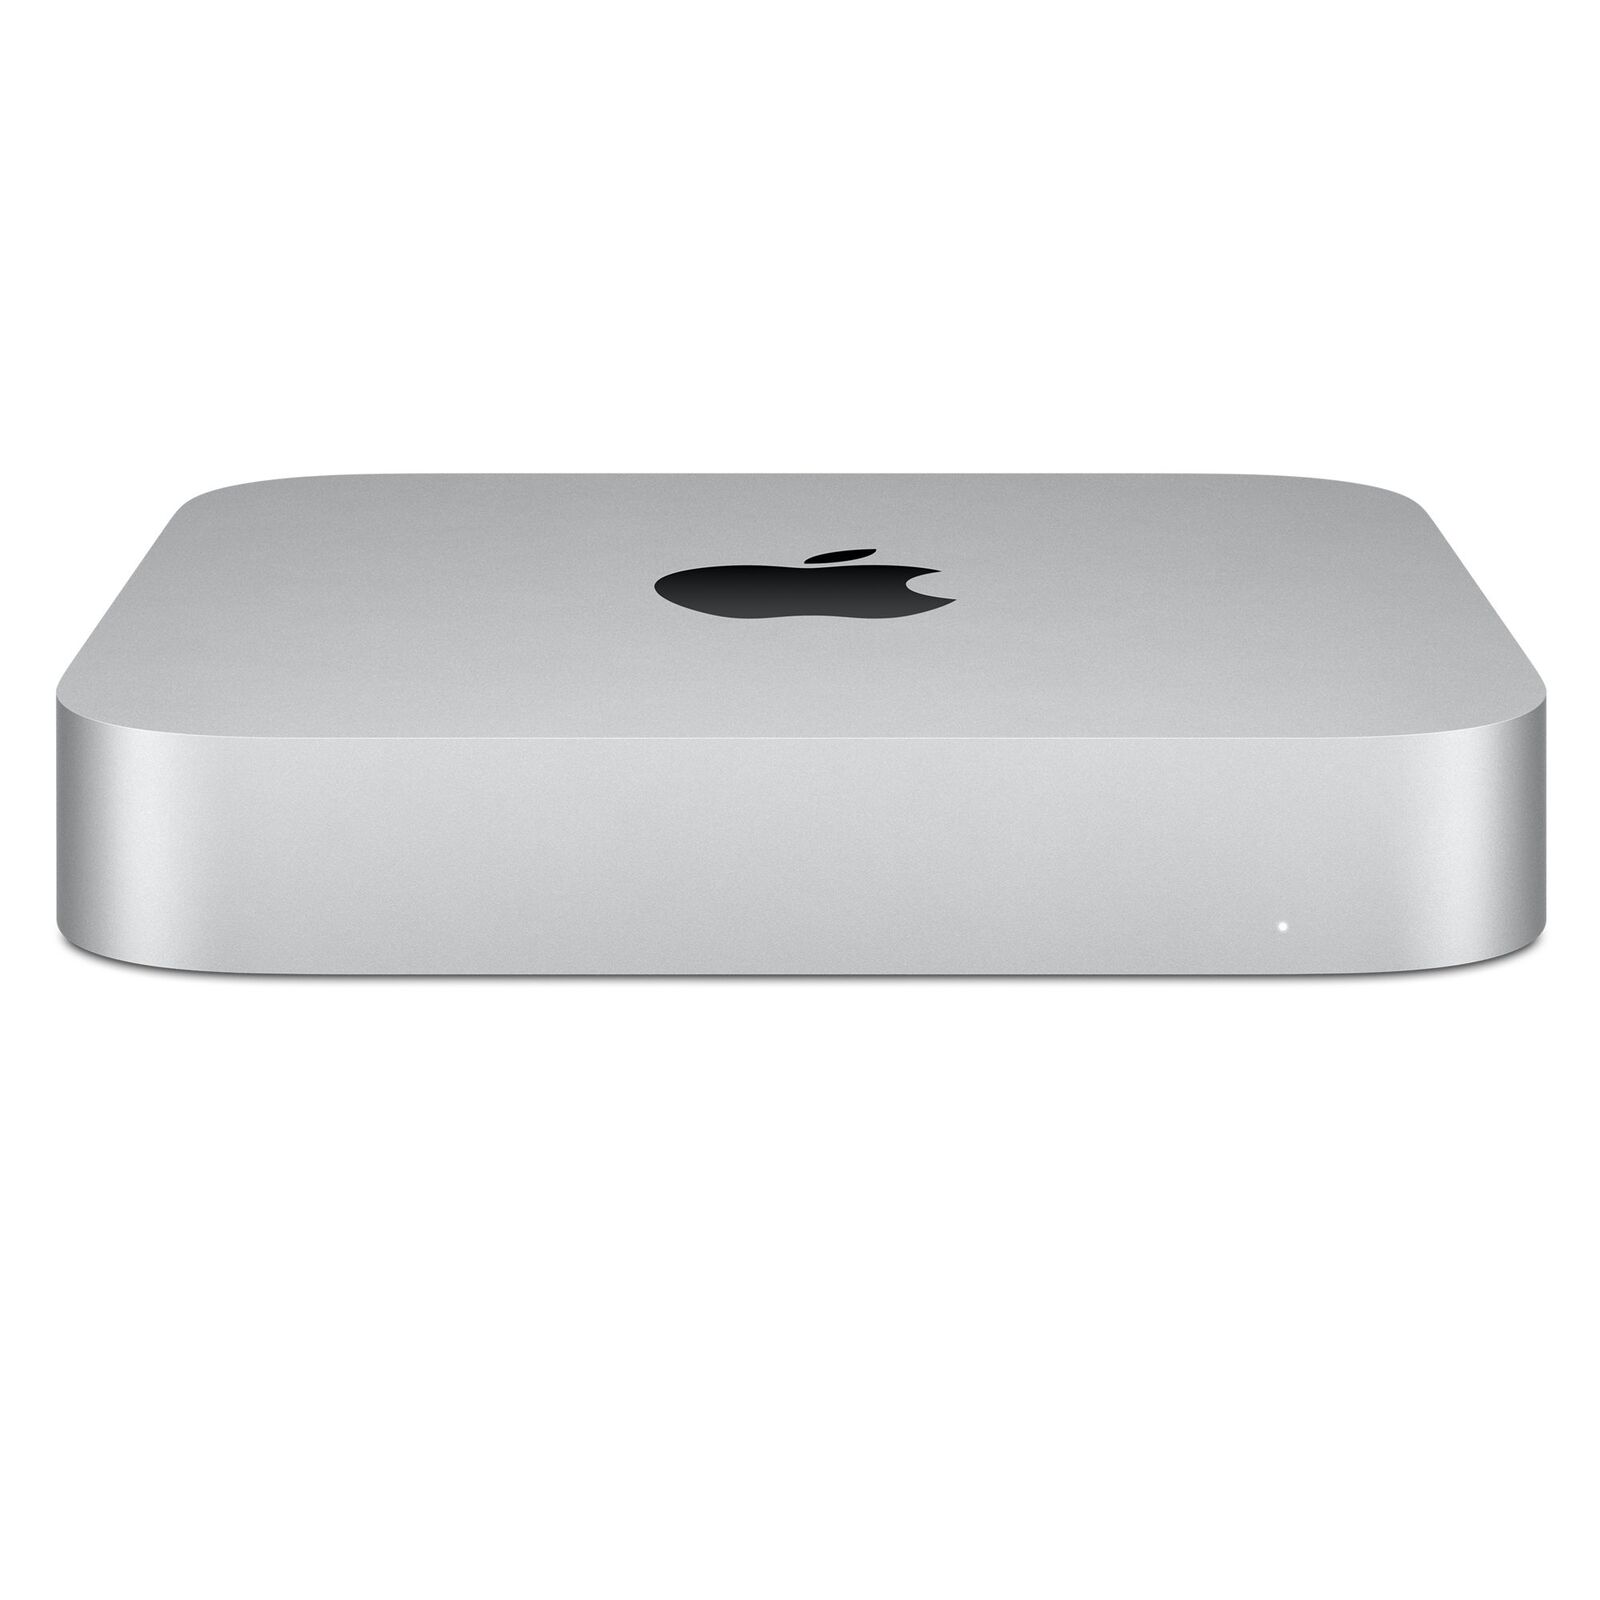 Apple Mac Mini Silver M1 16GB RAM 256GB SSD (Mgnr3ll/a) - Late 2020 - Very Good